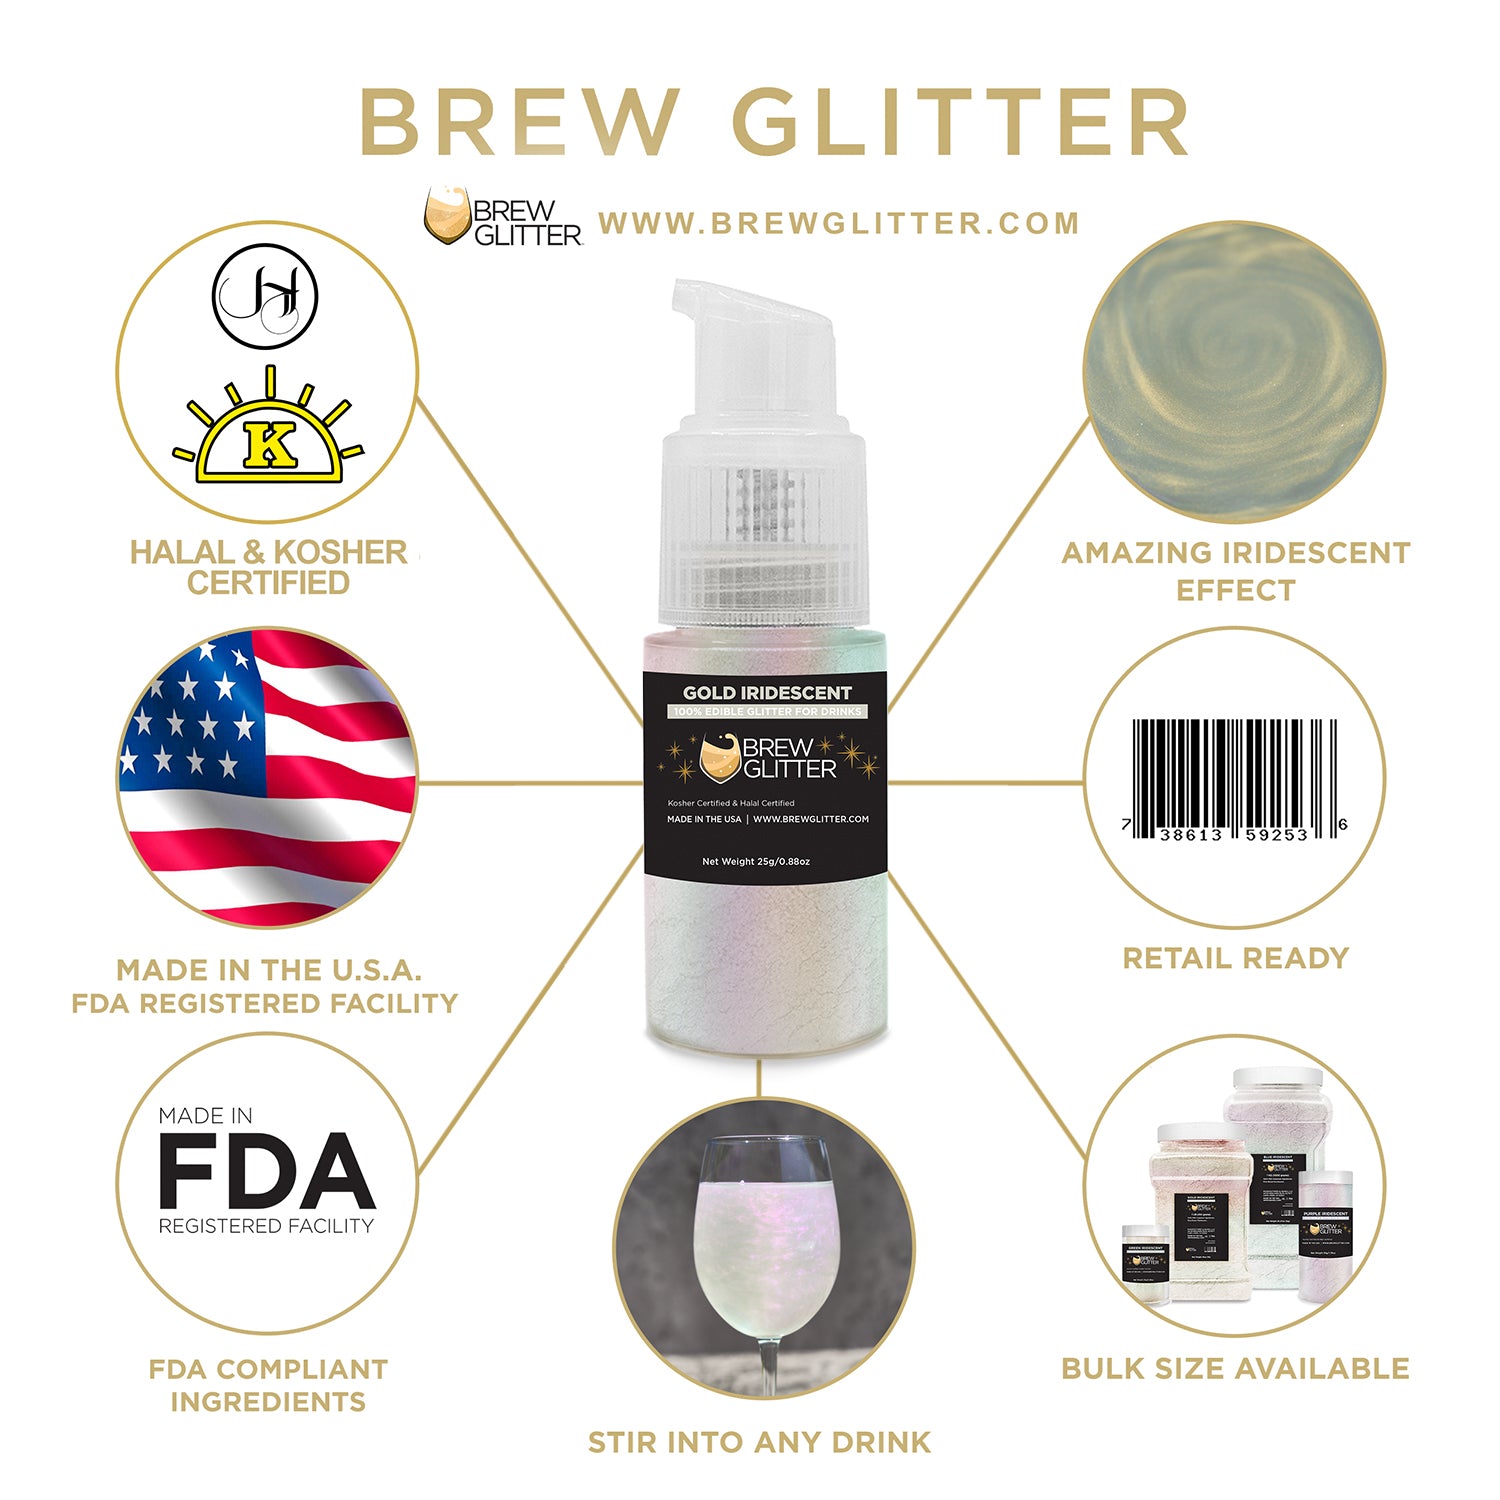 Gold Iridescent Brew Glitter Infographic